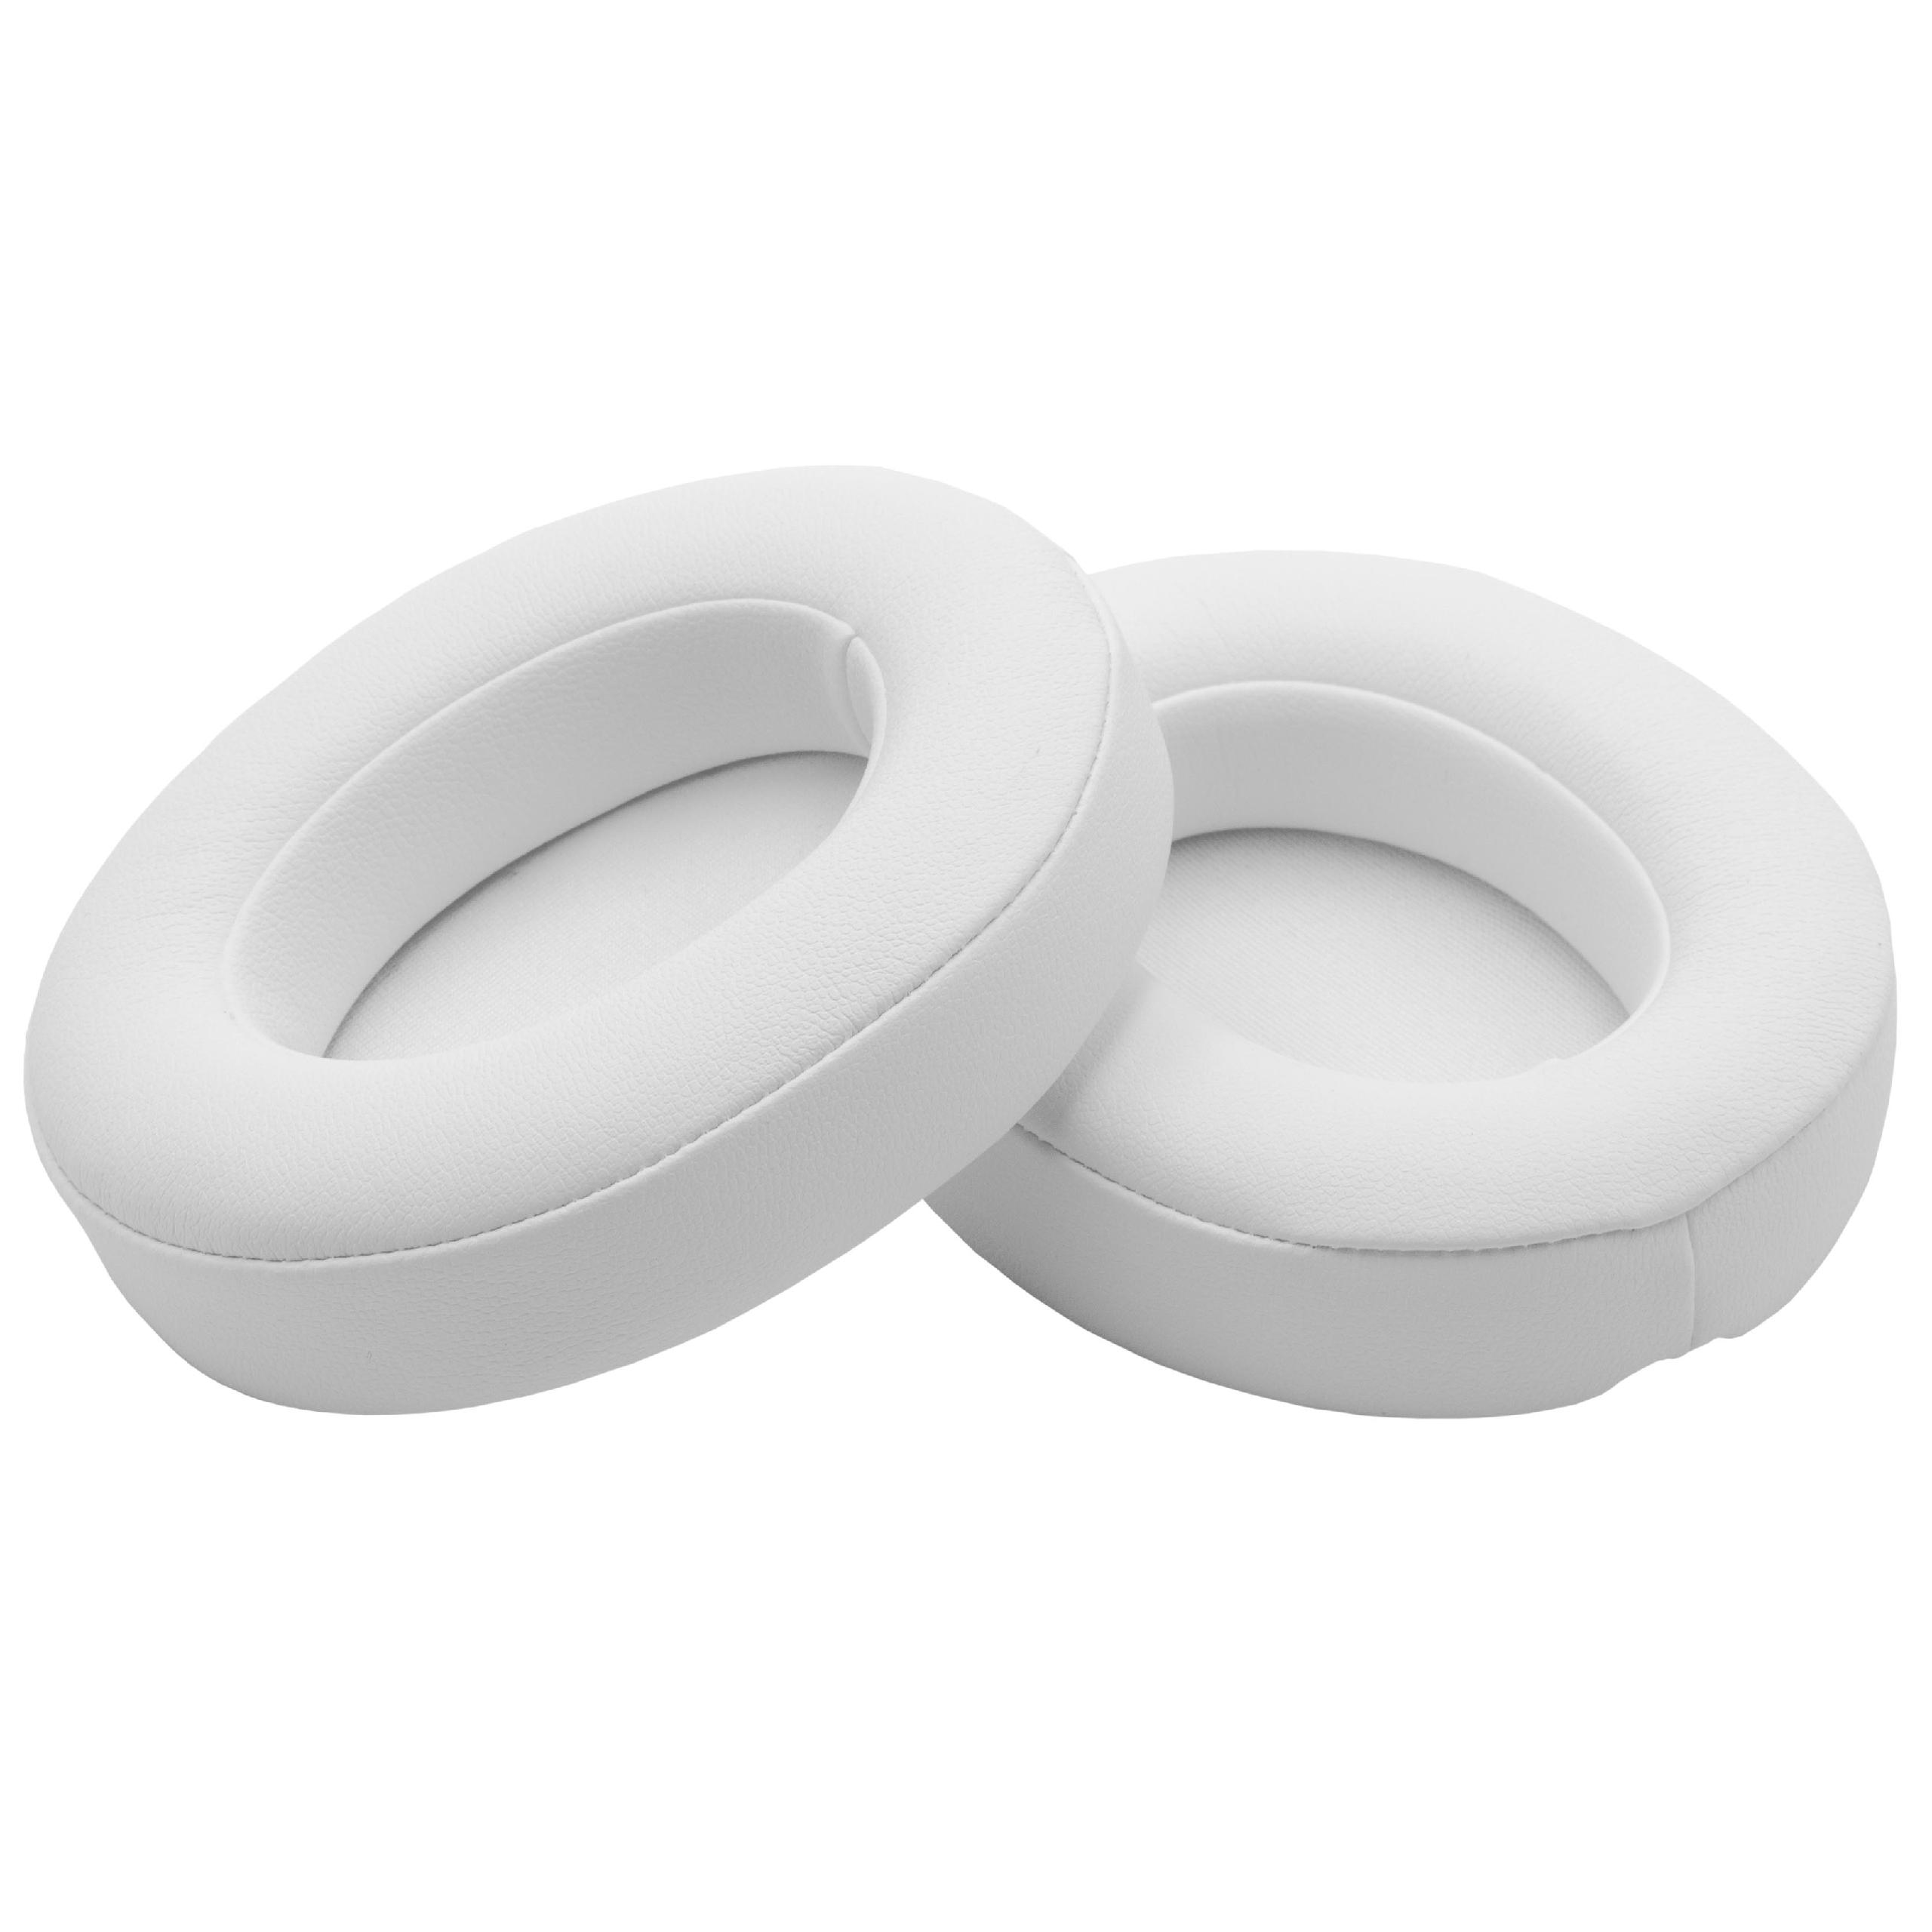 Ear Pads suitable for Beats by Dr. Dre Studio Headphones etc. - polyurethane / foam, 21 mm thick